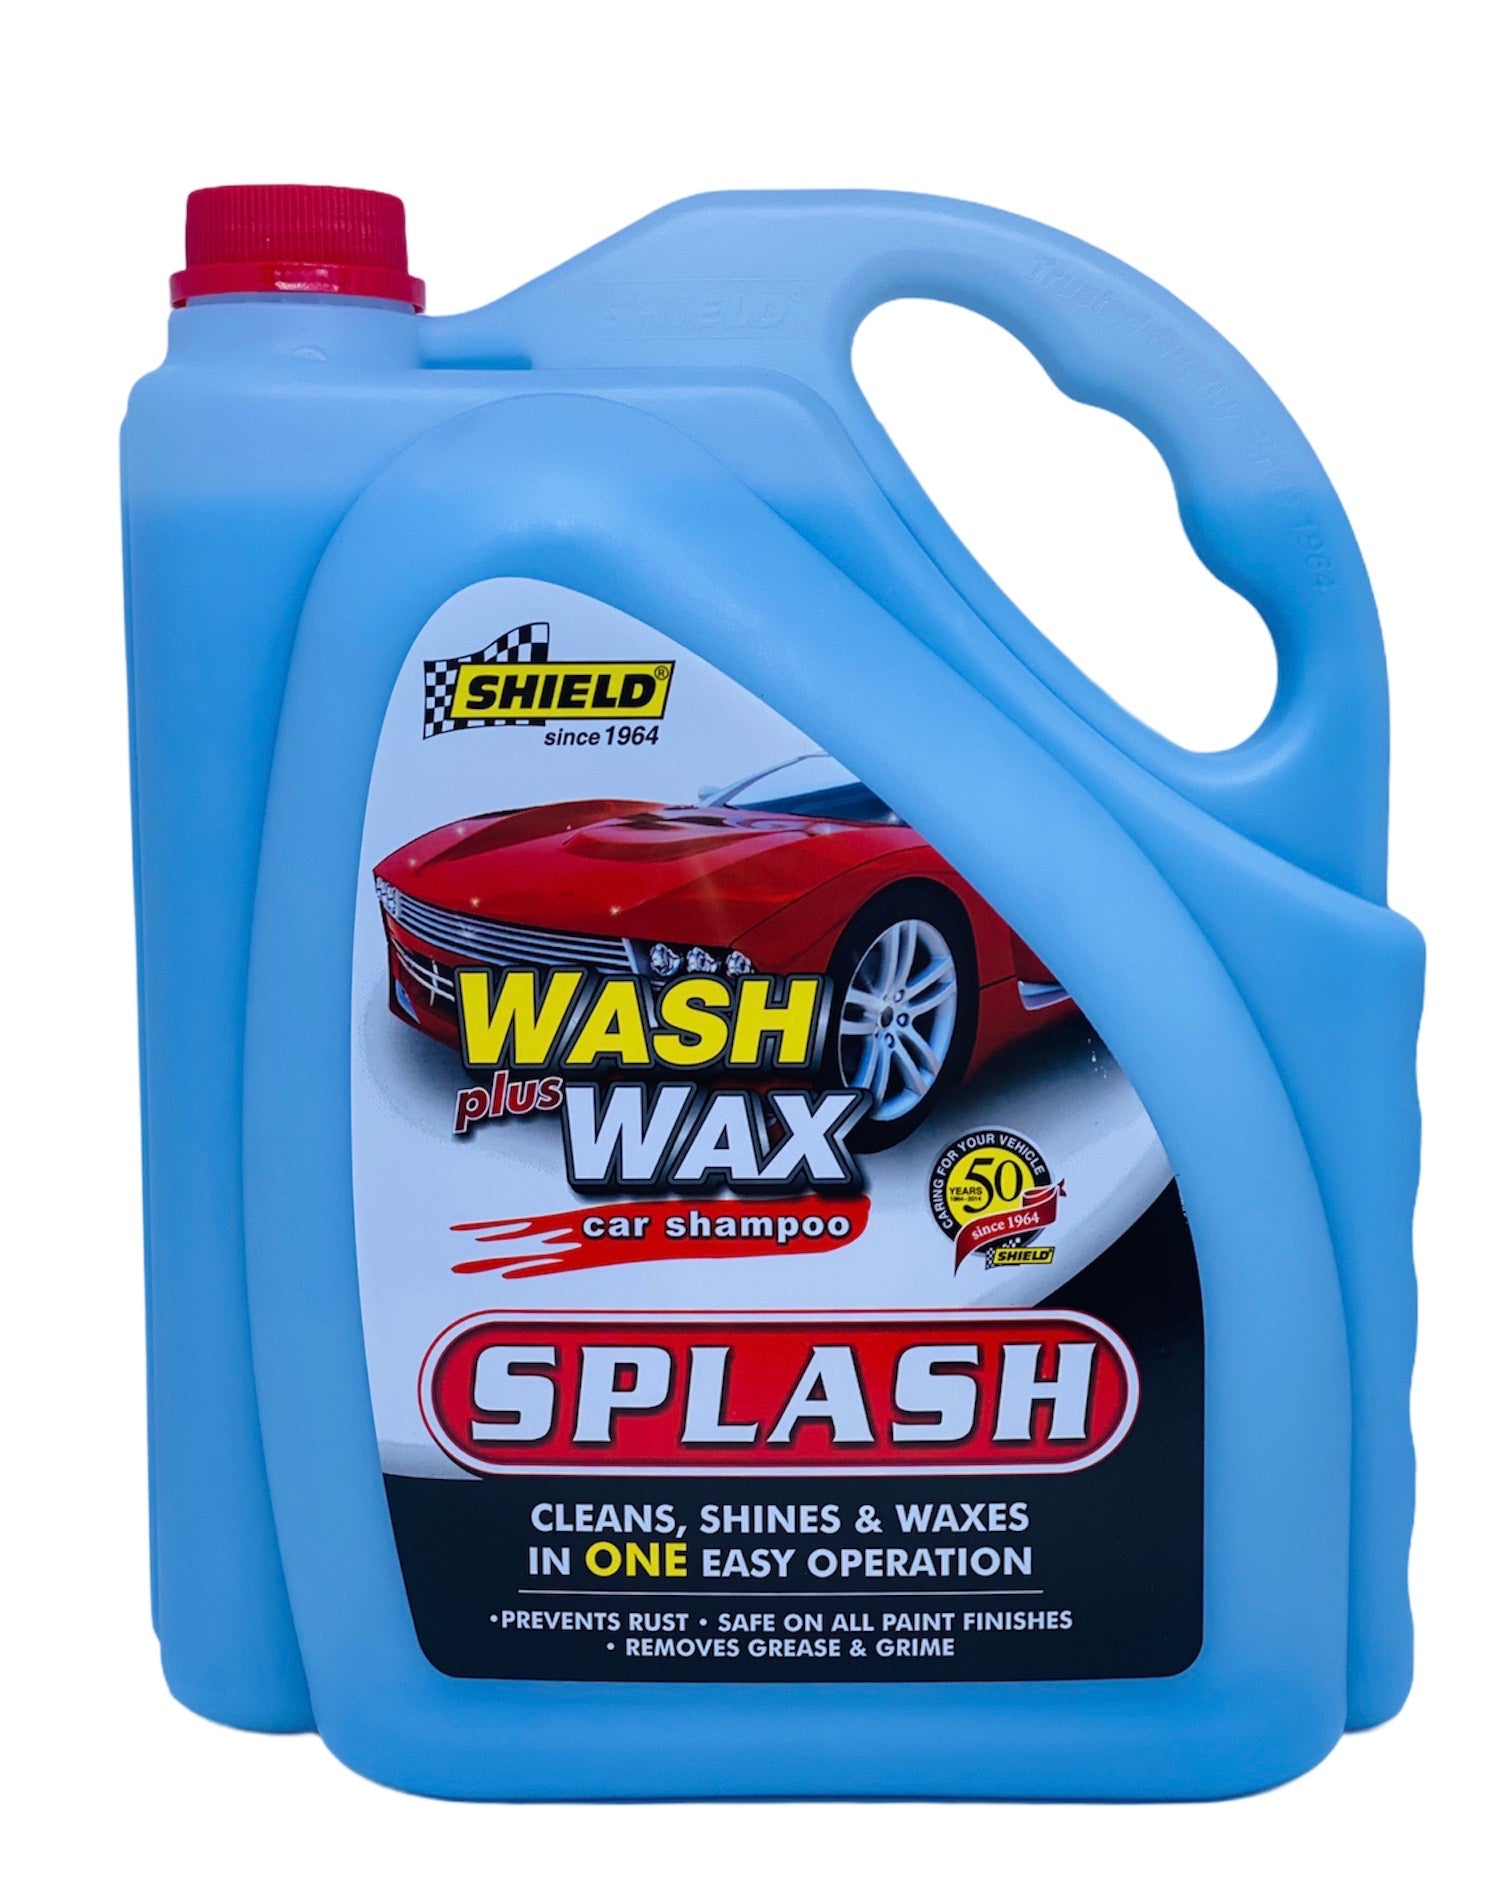 Shield Solutions Wash & Wax